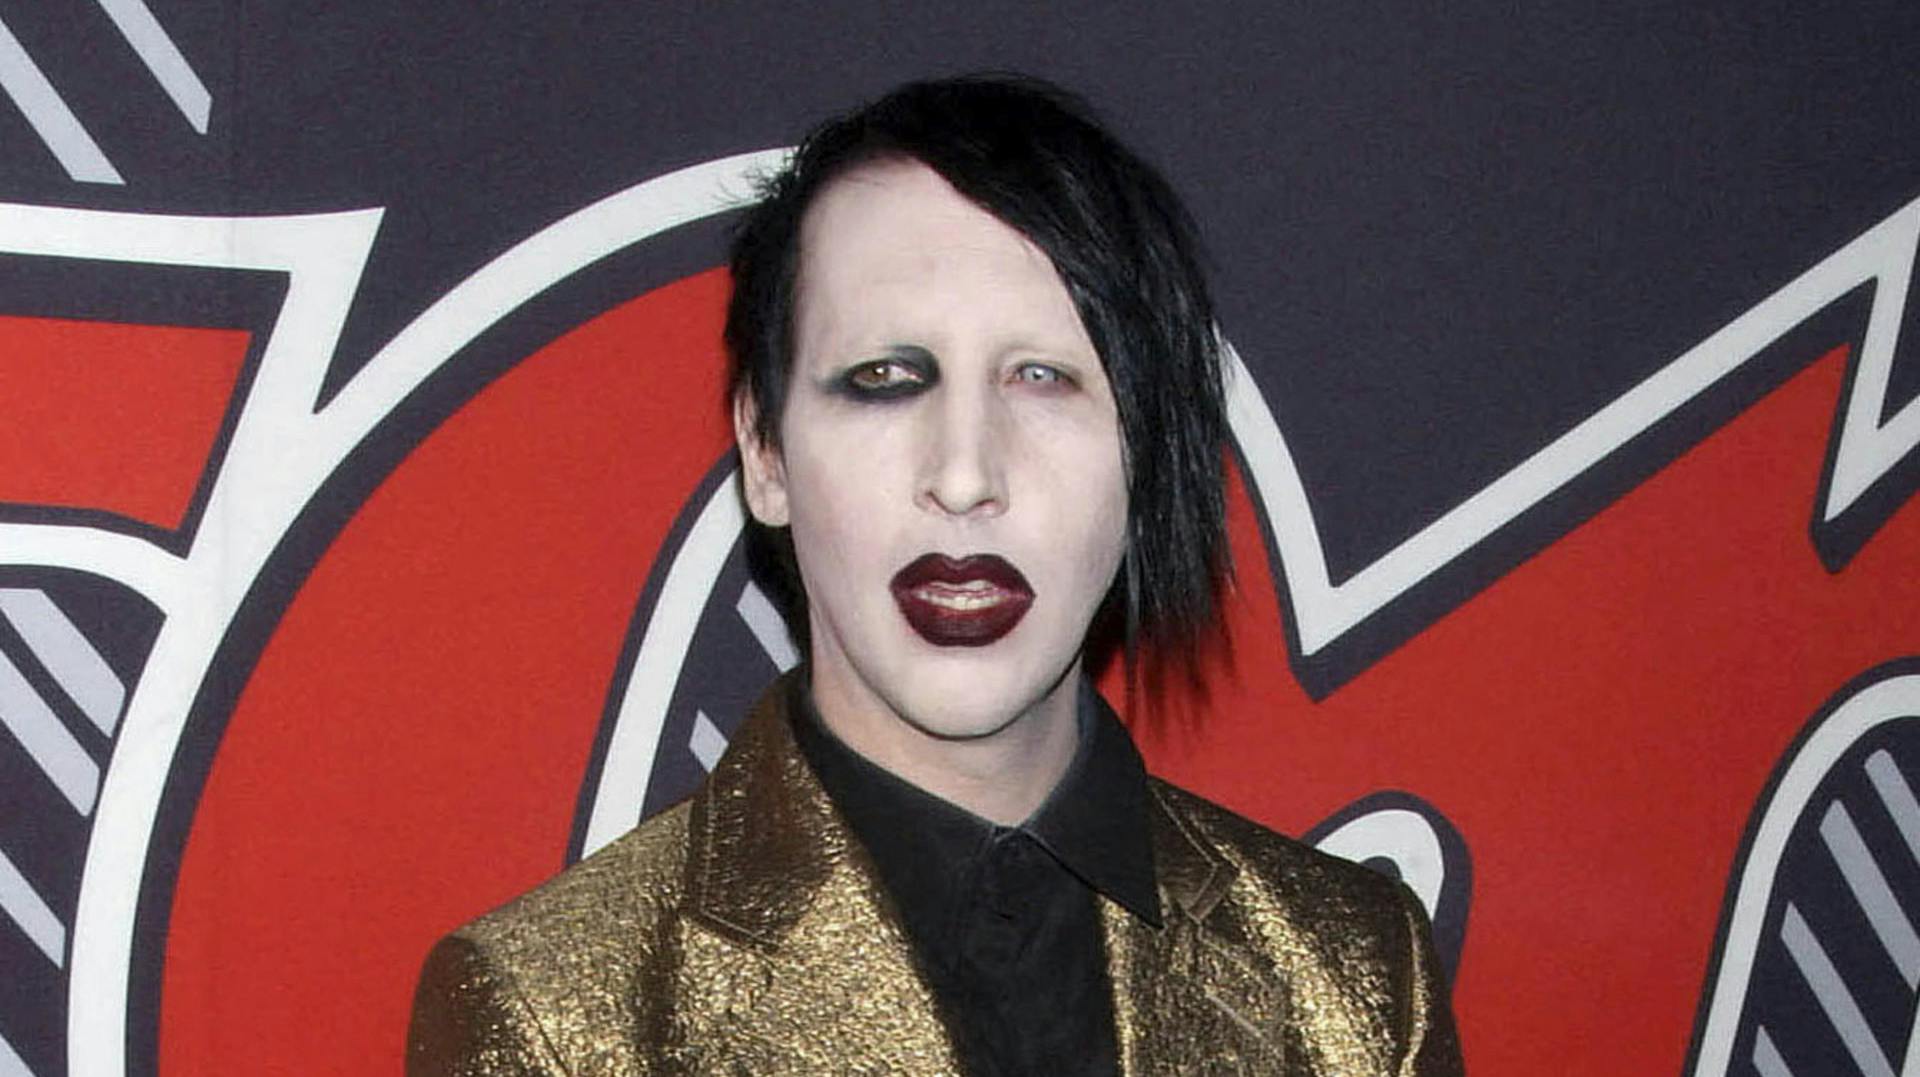 Ashley Morgan Smithline løj, da hun sagde, at ekskæresten Marilyn Manson har voldtaget hende.